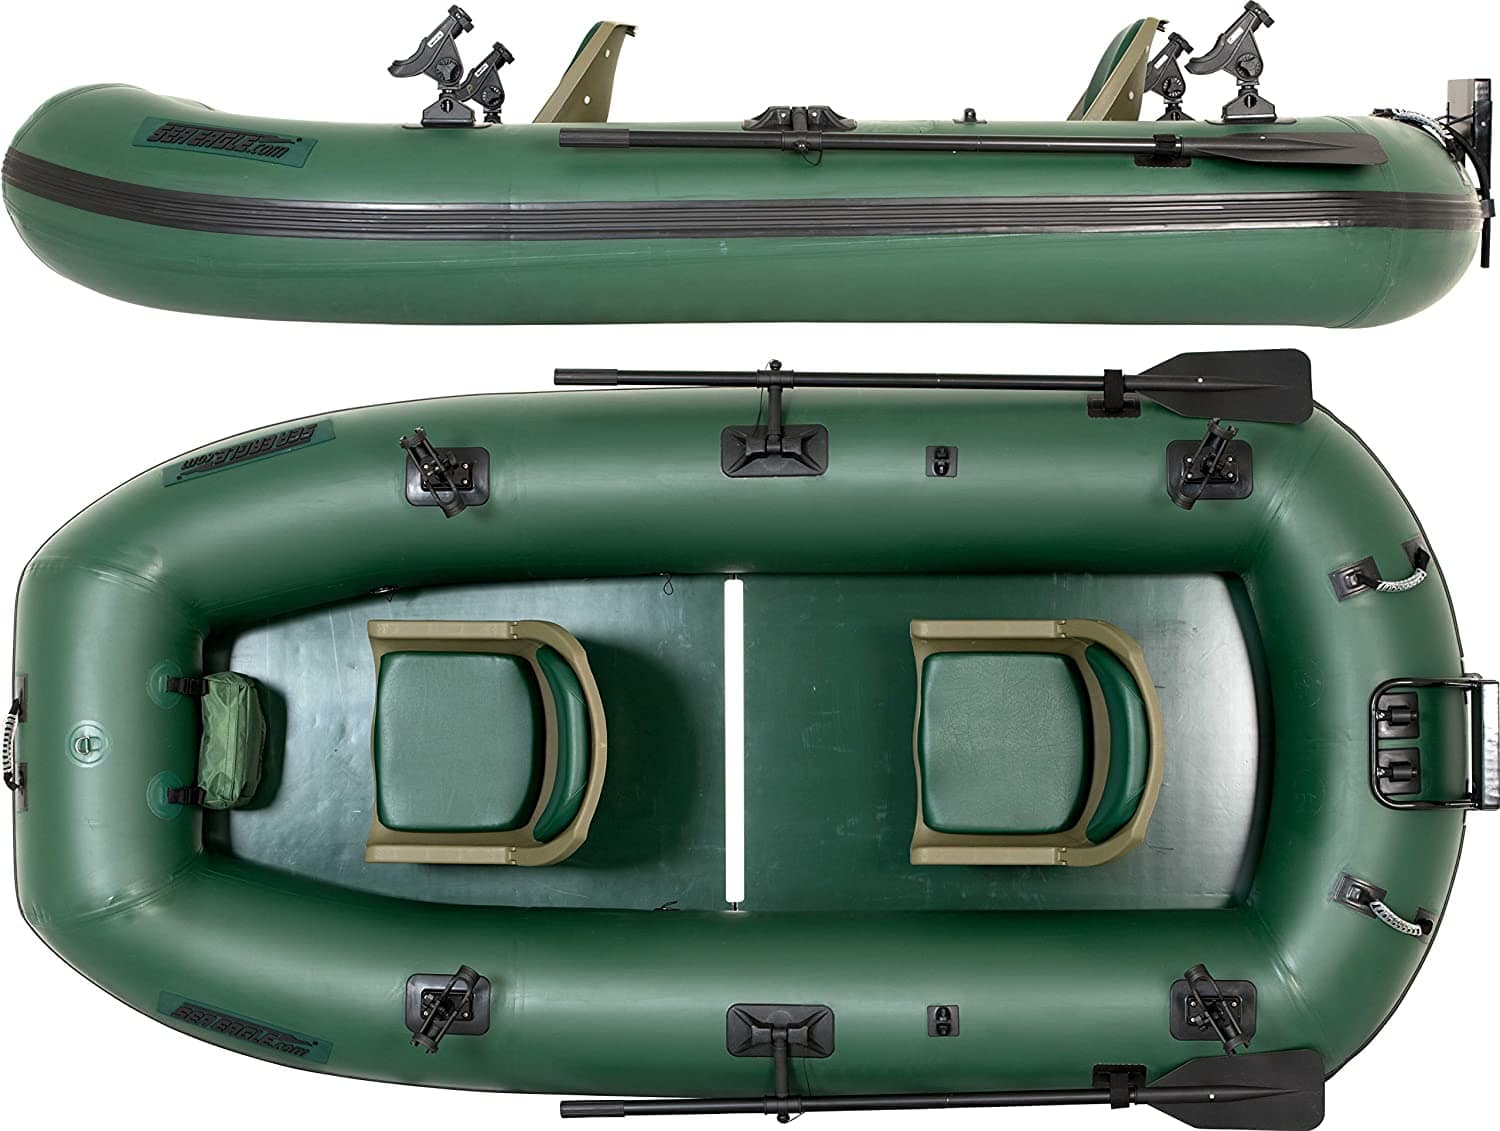 Sea Eagle Stealth Stalker 10 Frameless Inflatable Fishing Raft Pro